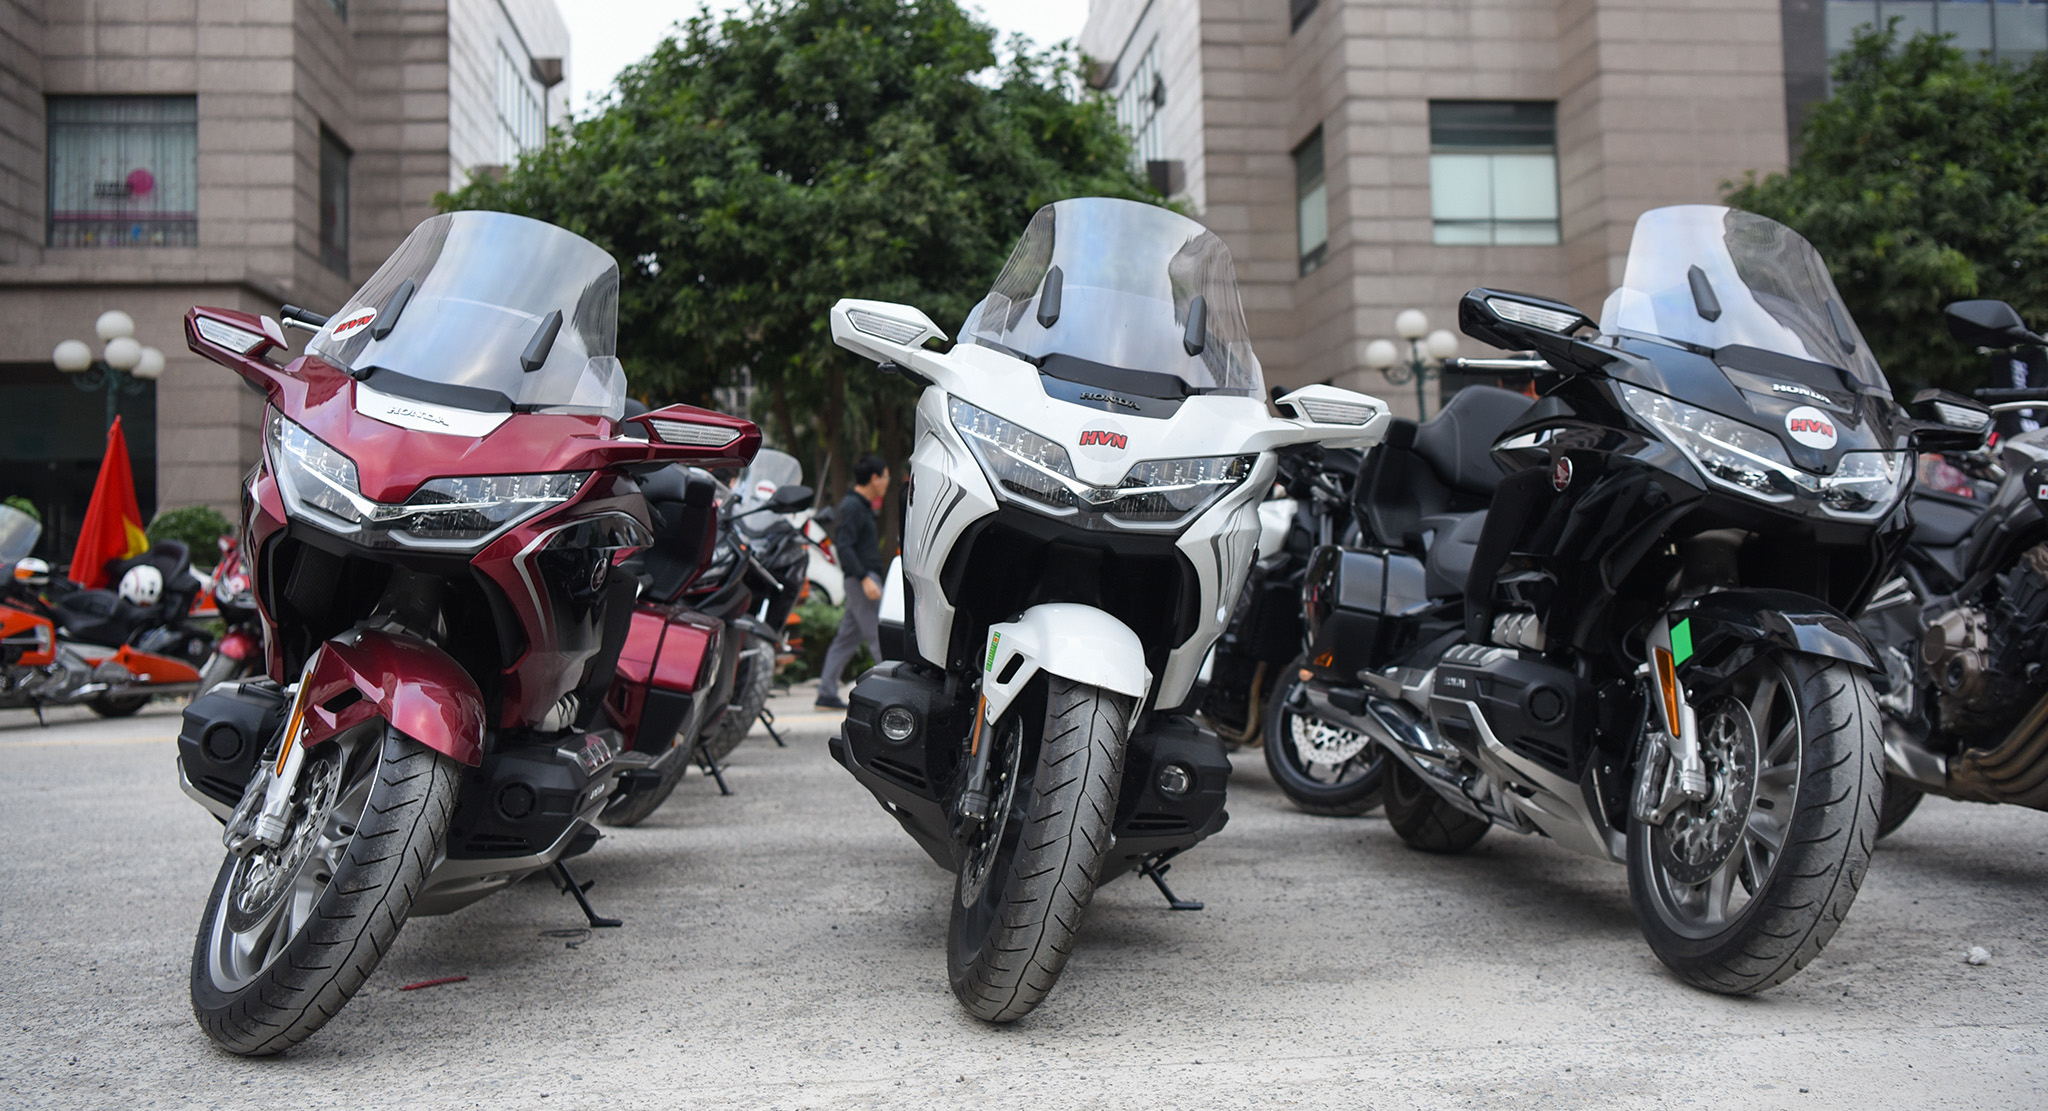 Honda Biker Day 2020: Kết nối những trái tim đam mê xe PKL dsc-2527-copy.jpg